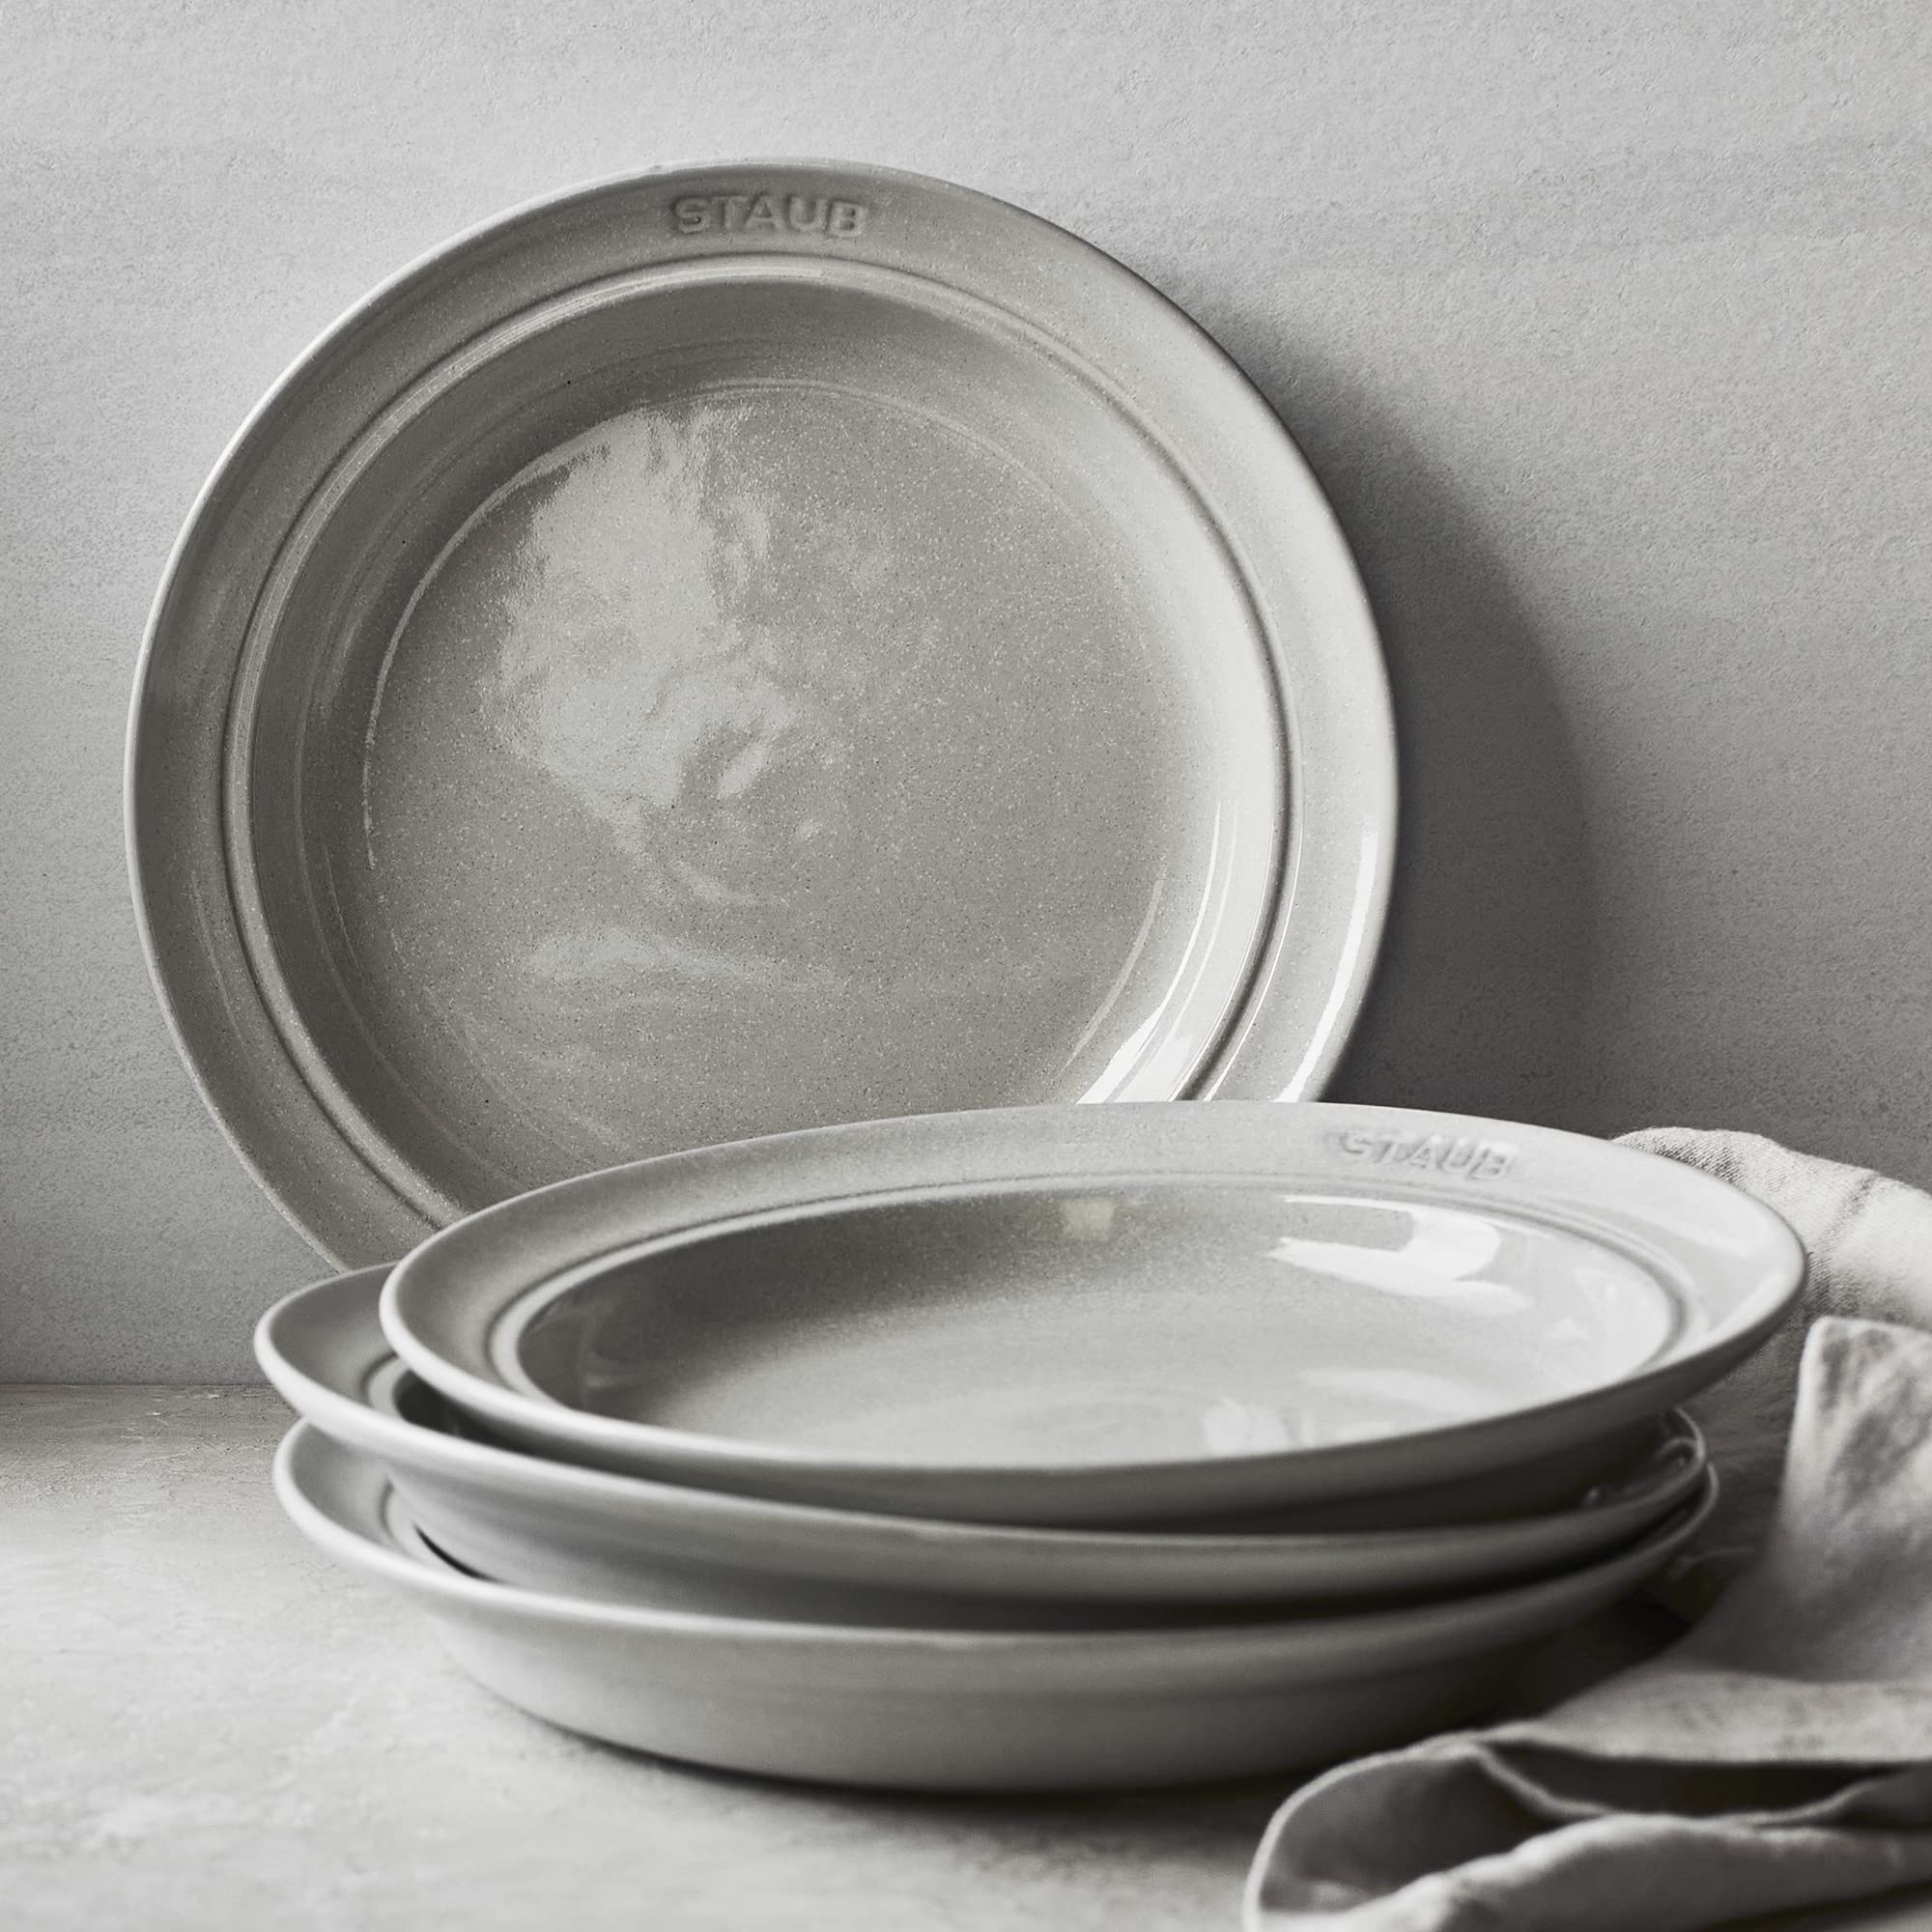 Staub Ceramic Dinnerware 4-pc 9.5-inch Soup/Pasta Bowl Set - White Truffle